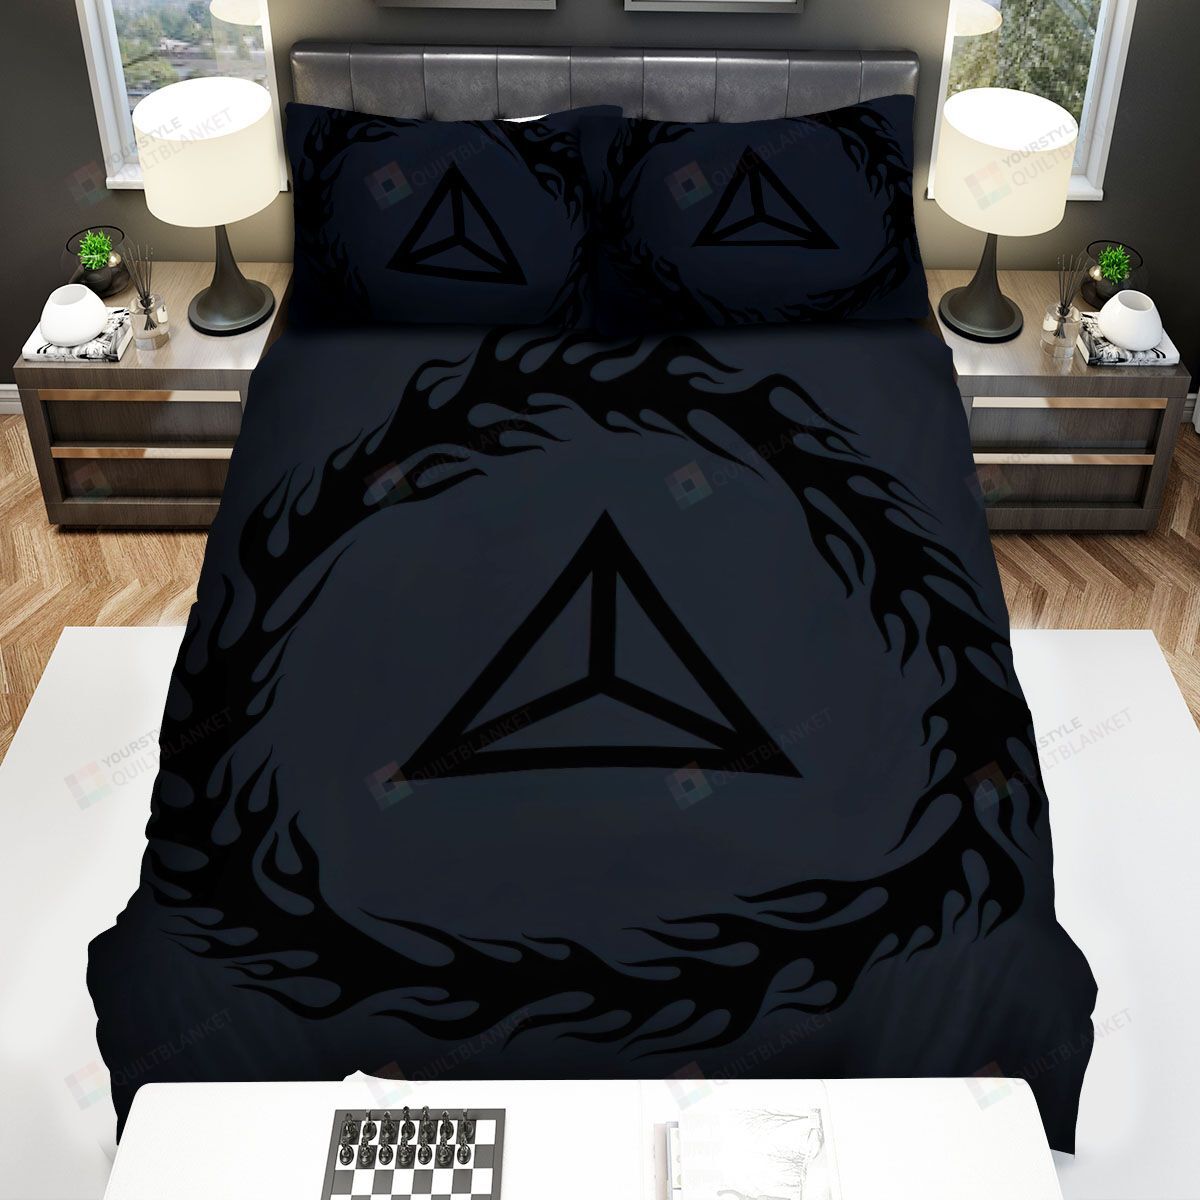 Mudvayne Band Diamond Bed Sheets Spread Comforter Duvet Cover Bedding Sets